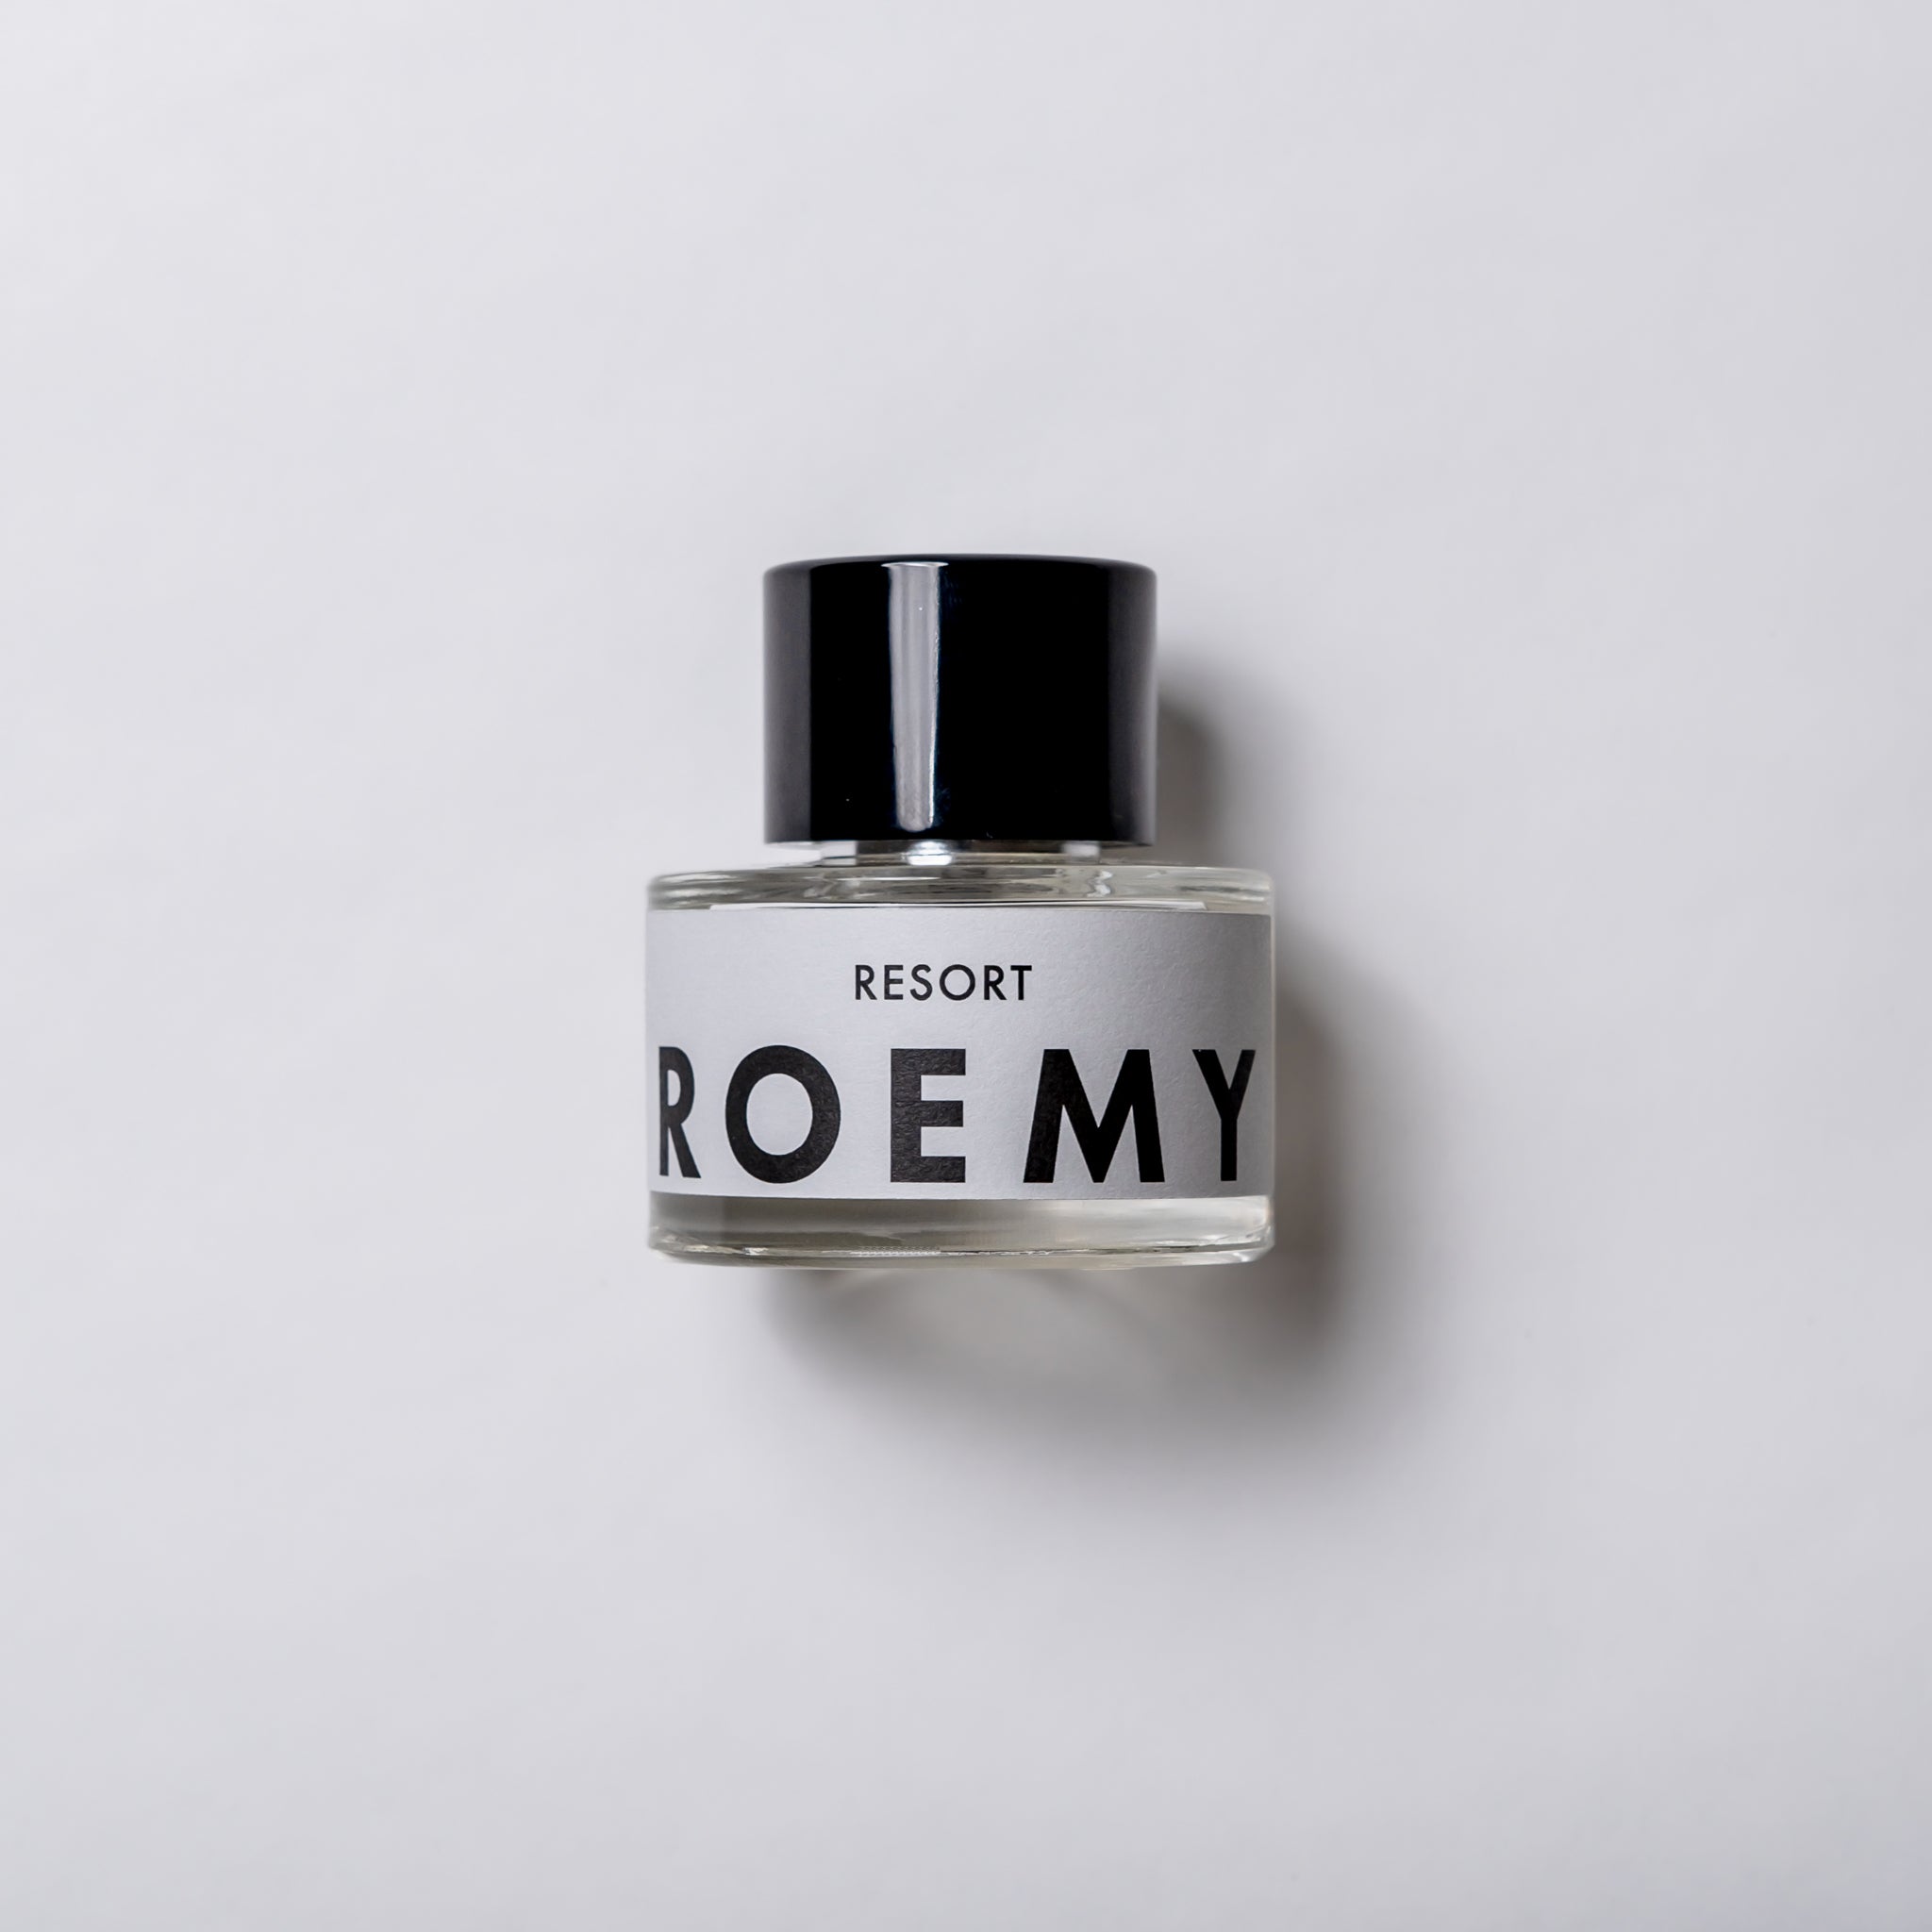 ROEMY Resort 55mL Parfum - top down